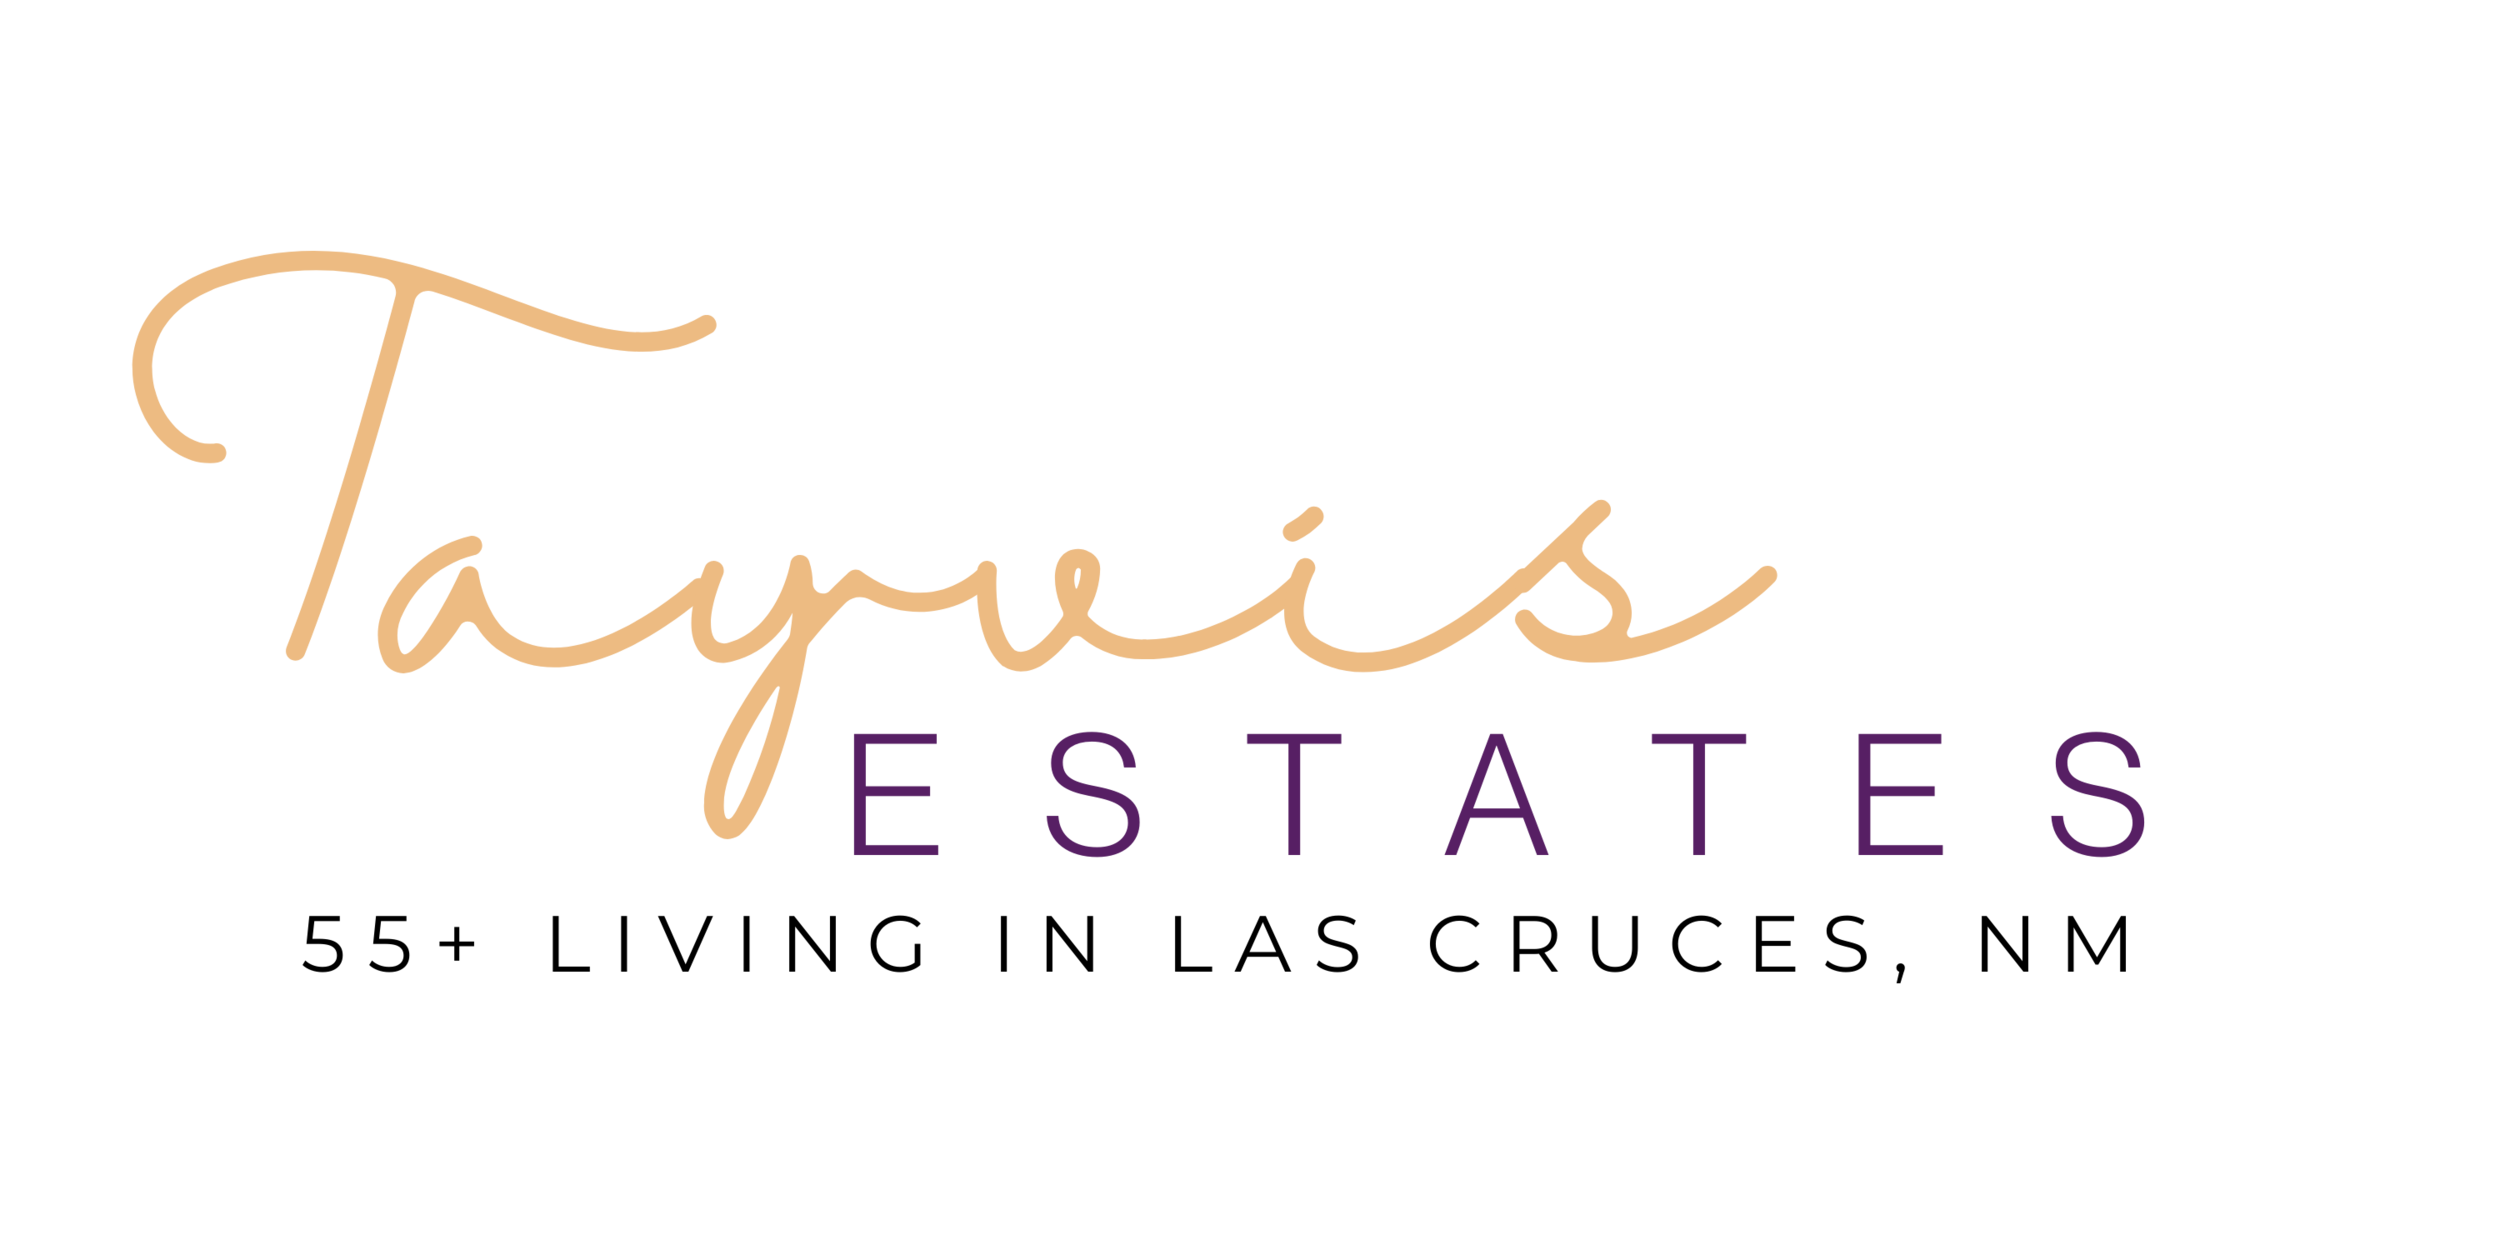 Tayvis Estates